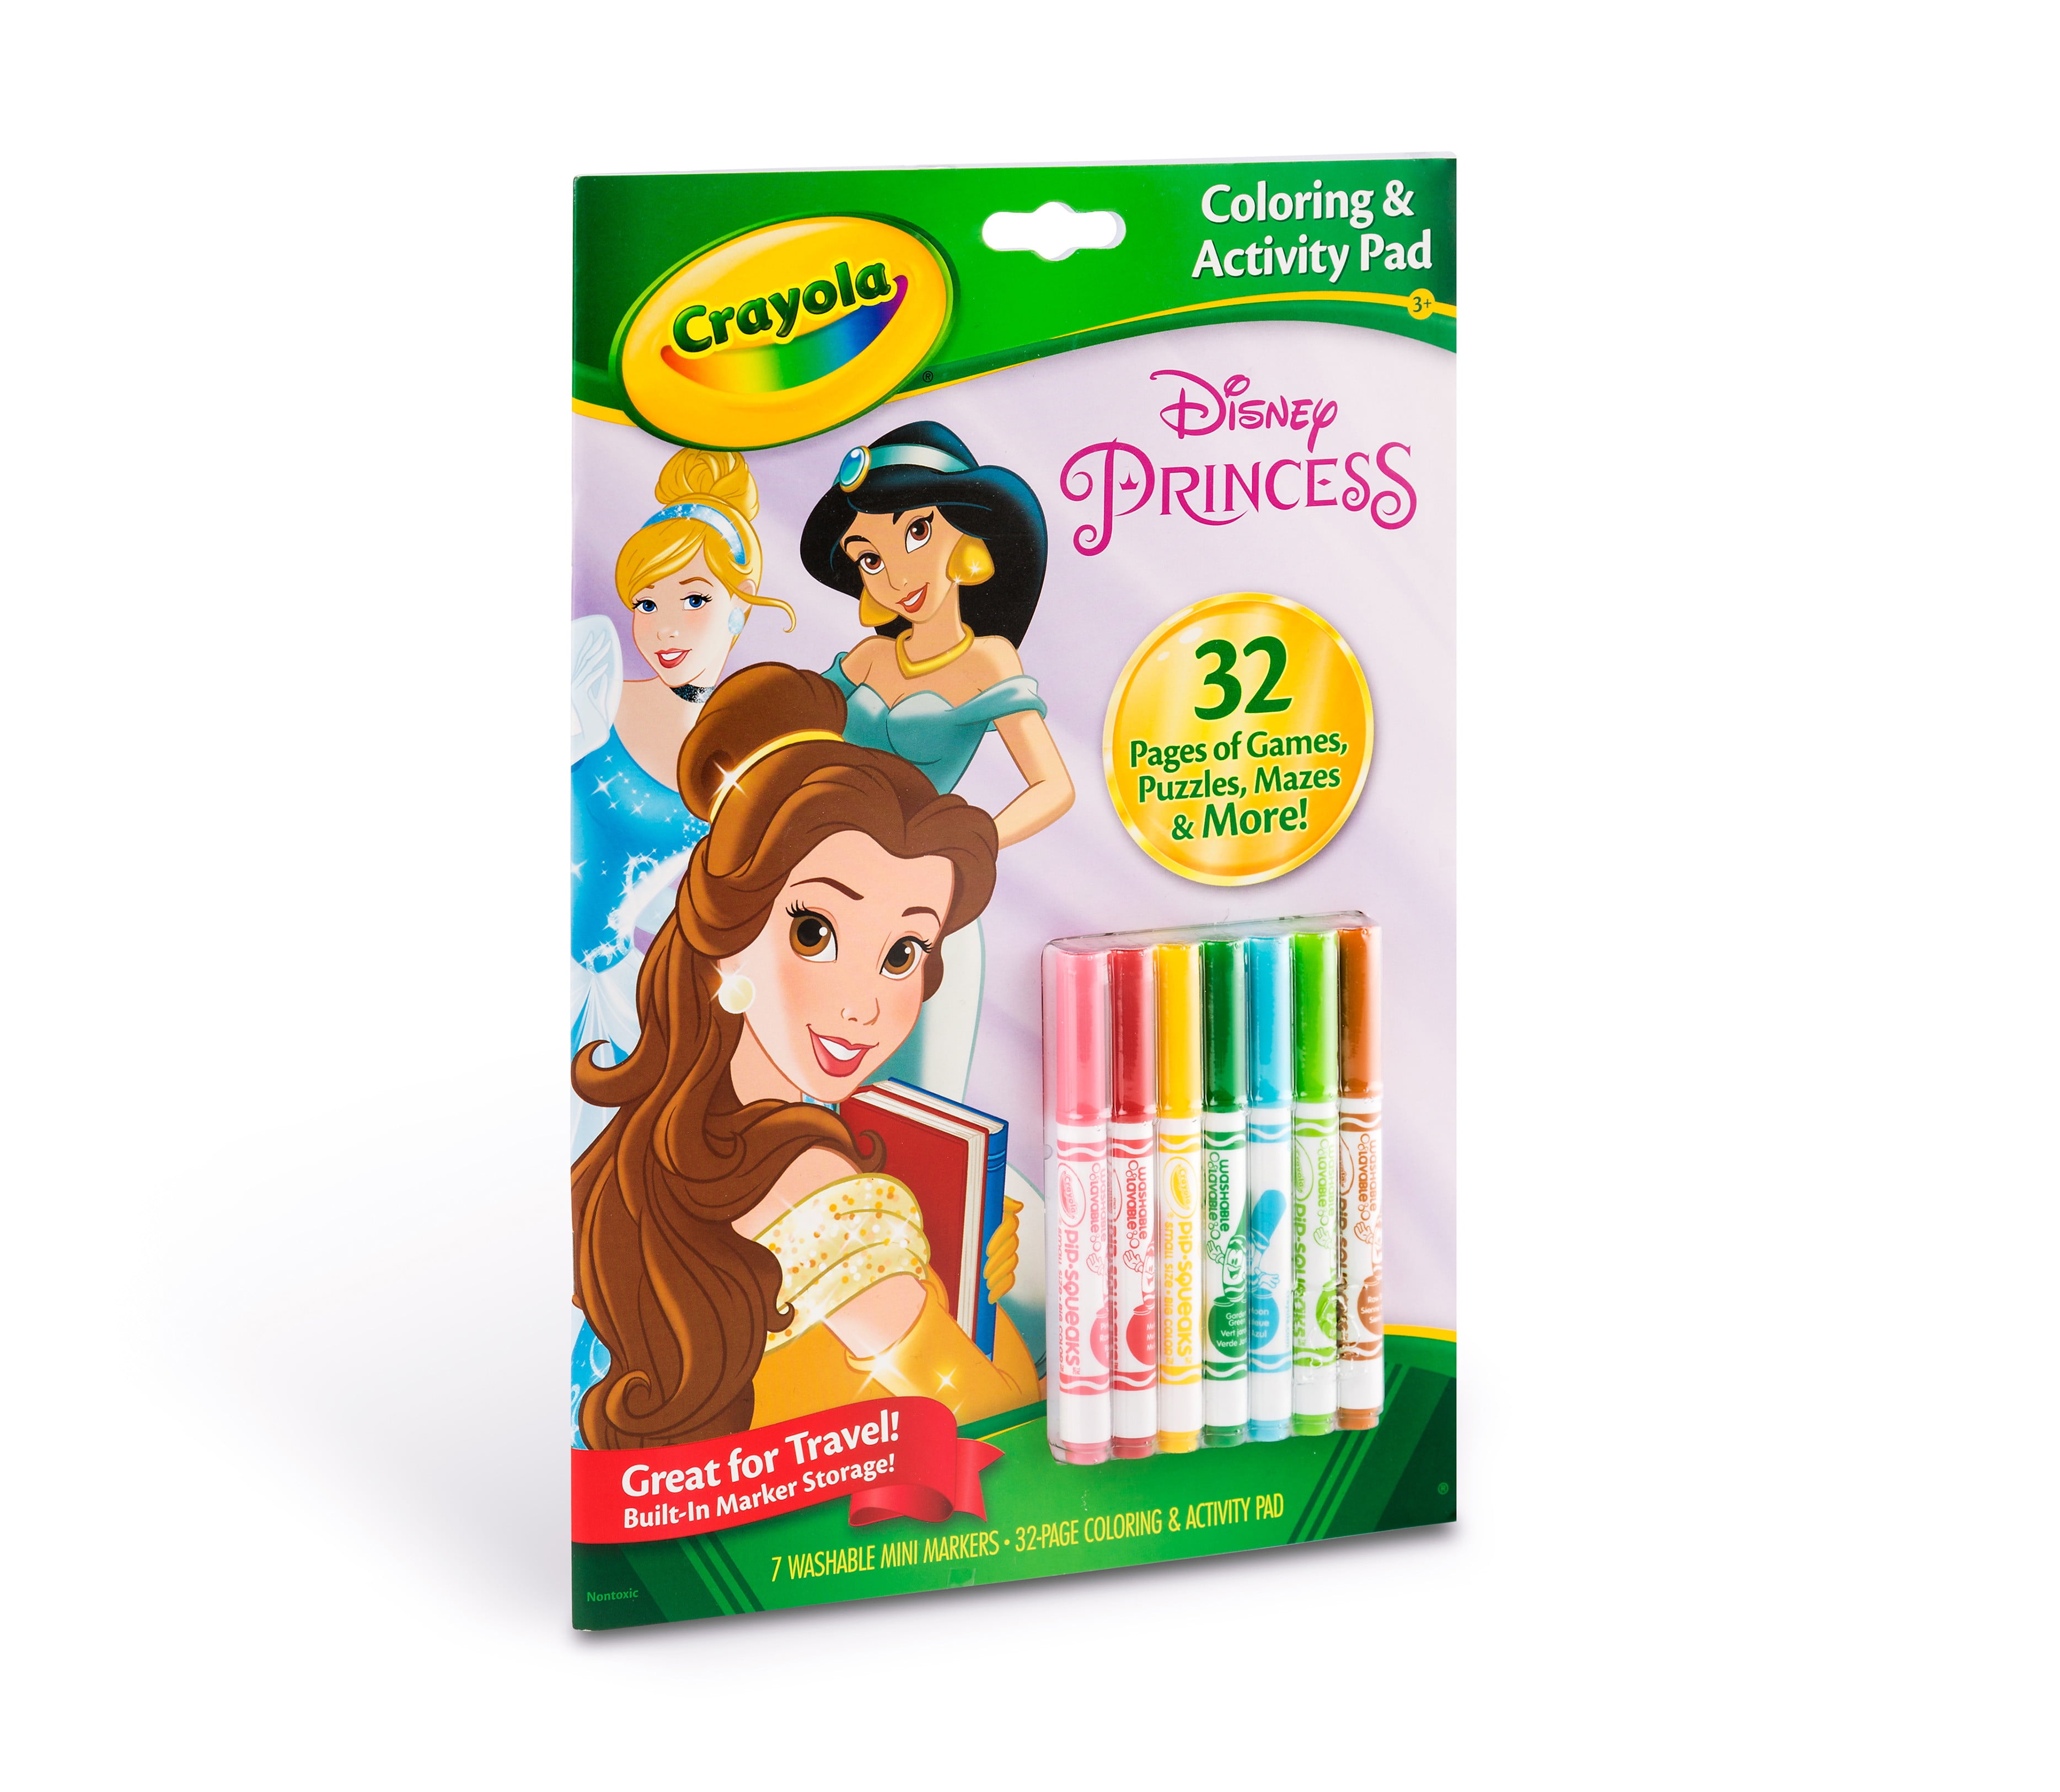 5pc Set Disney Princess Coloring Book Crayons Markers Colored